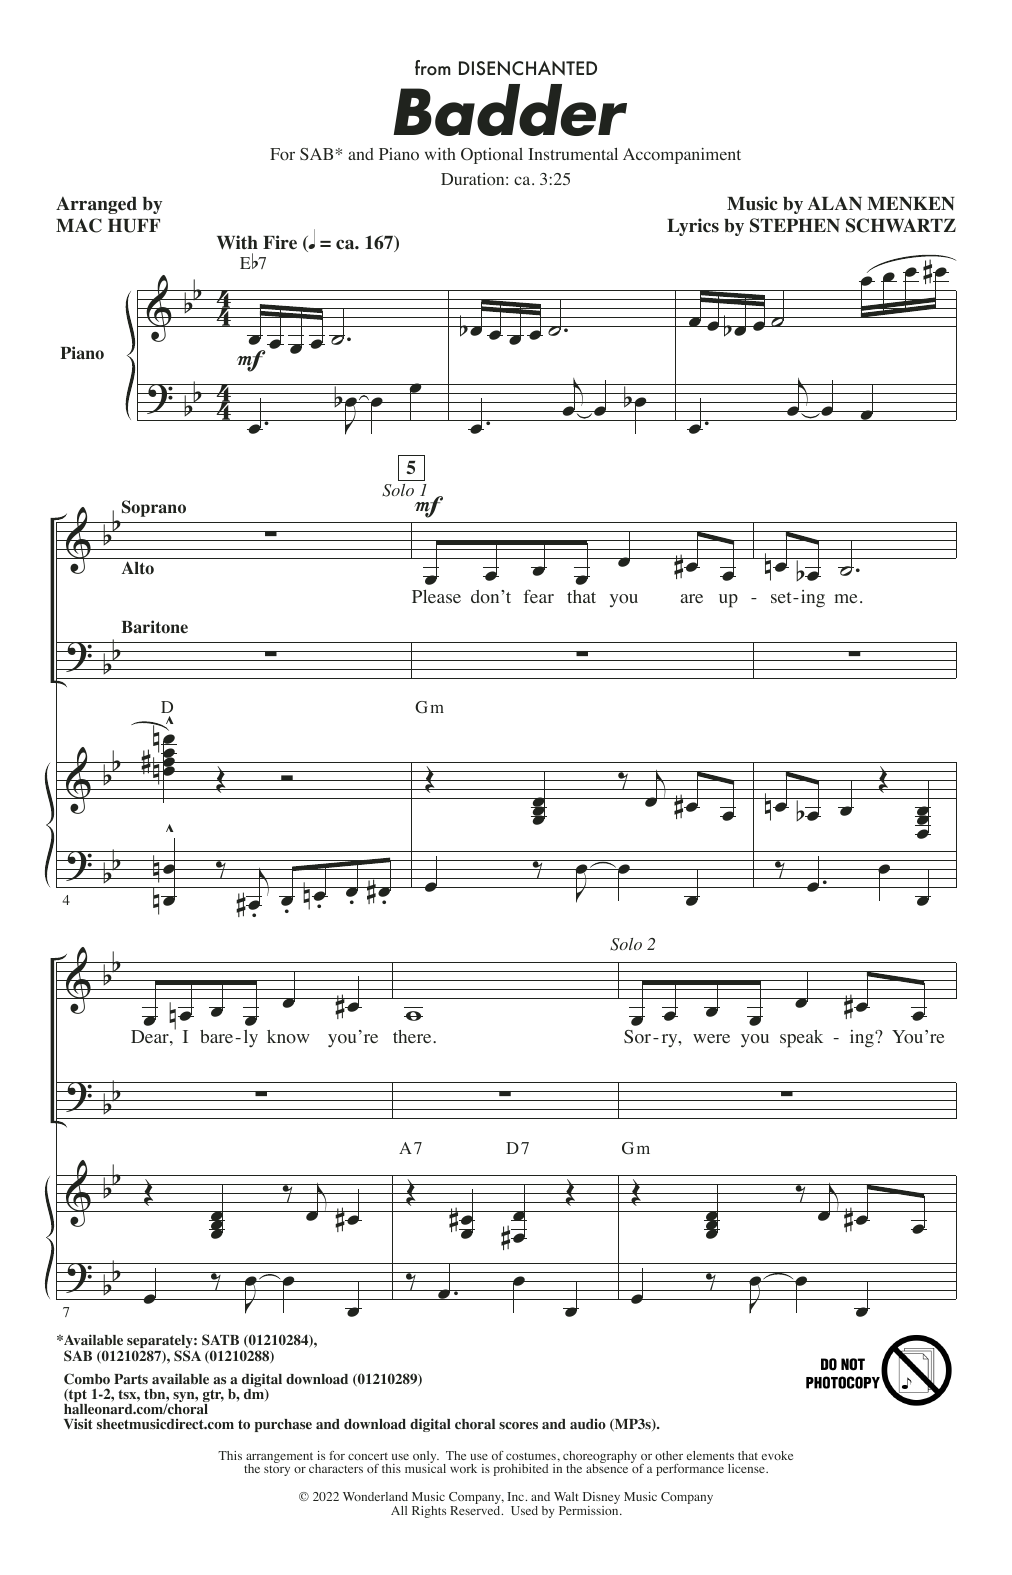 Amy Adams and Maya Rudolph Badder (from Disenchanted) (arr. Mac Huff) Sheet Music Notes & Chords for SATB Choir - Download or Print PDF